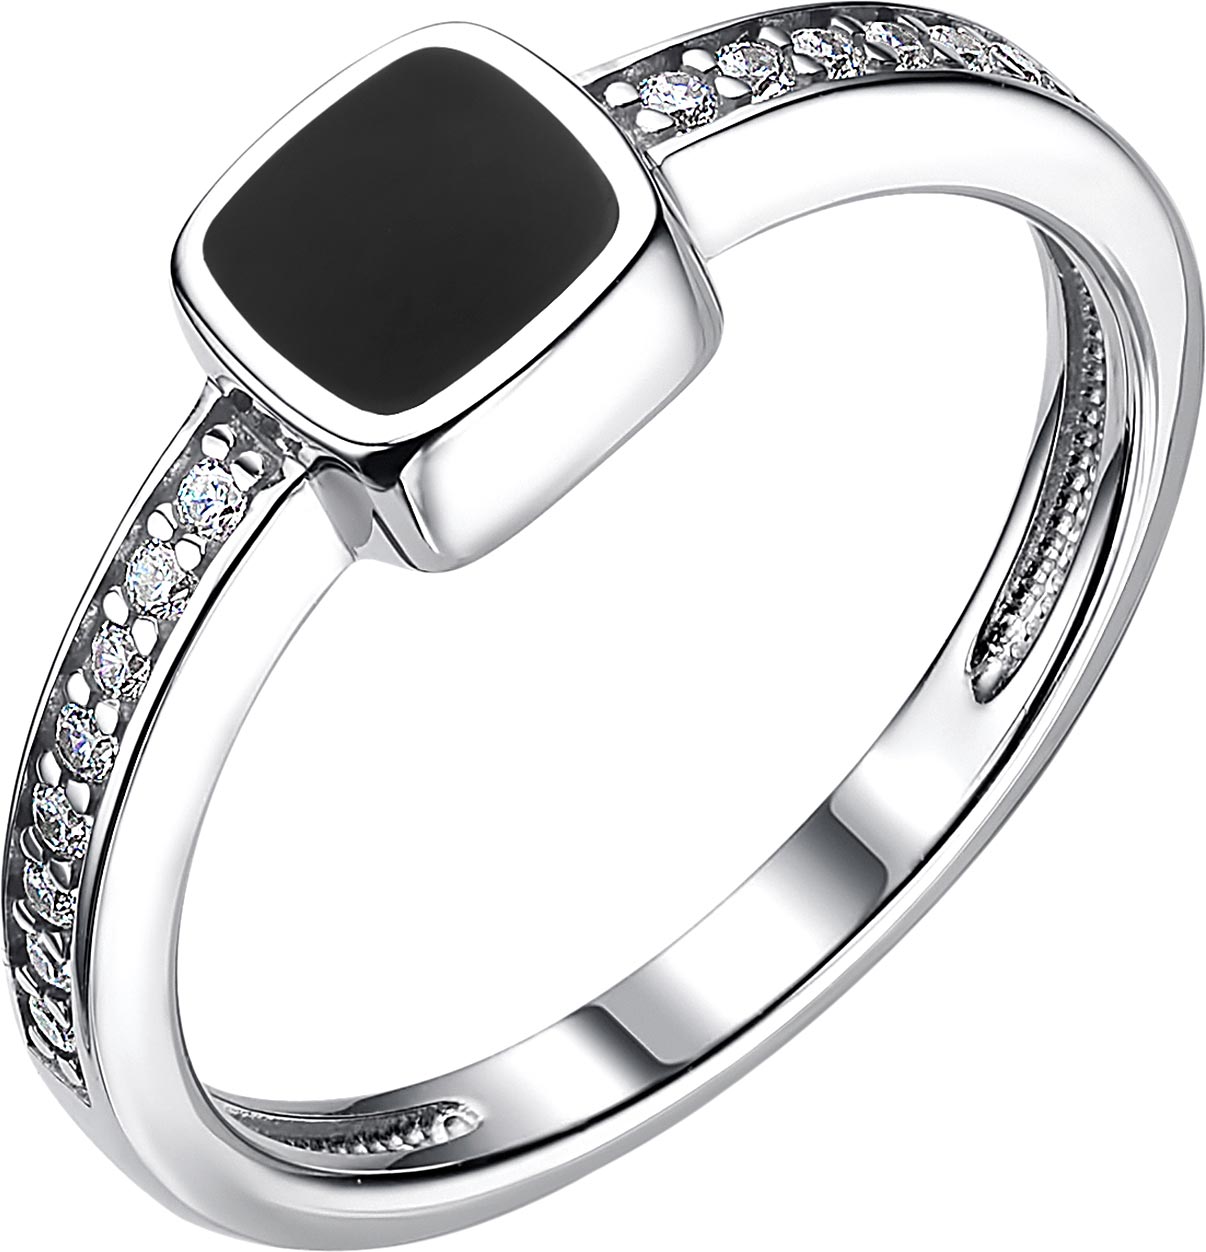 Кольца Алькор 01-2107/0JEM3-00 алькор кольцо с 1 топазом из серебра 01 0372 юстл 00 размер 17